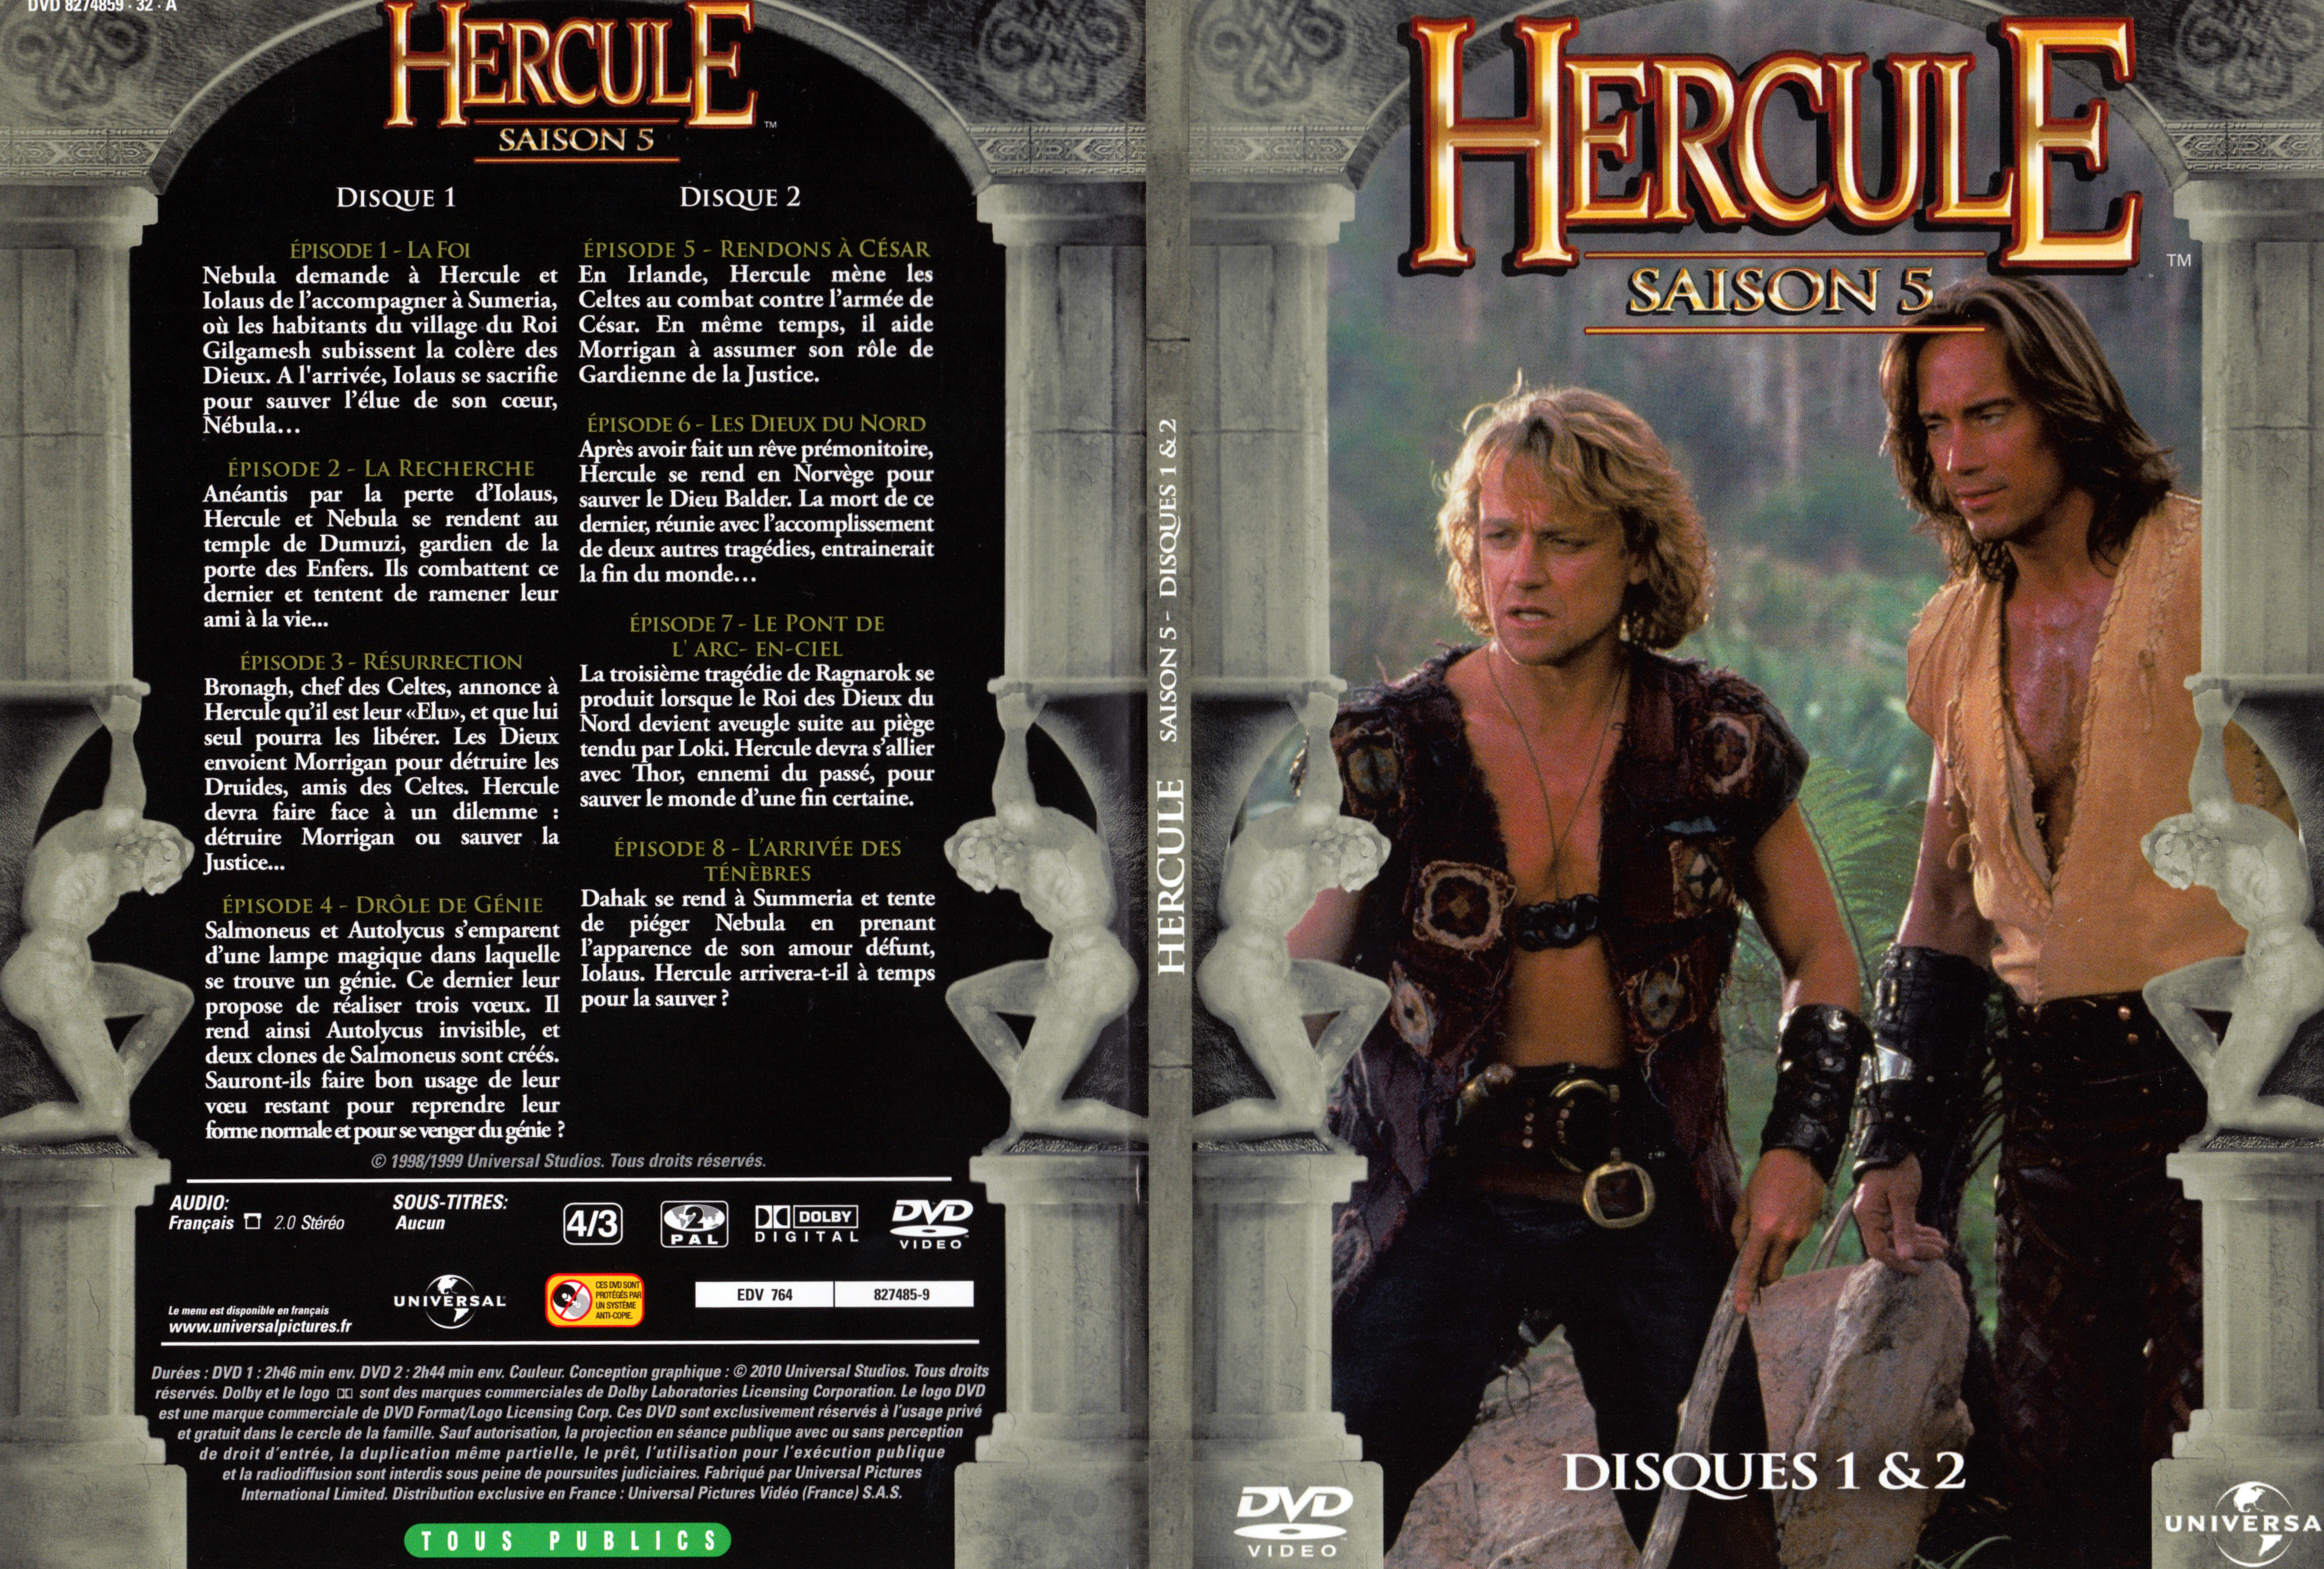 Jaquette DVD Hercule Saison 5 DVD 1